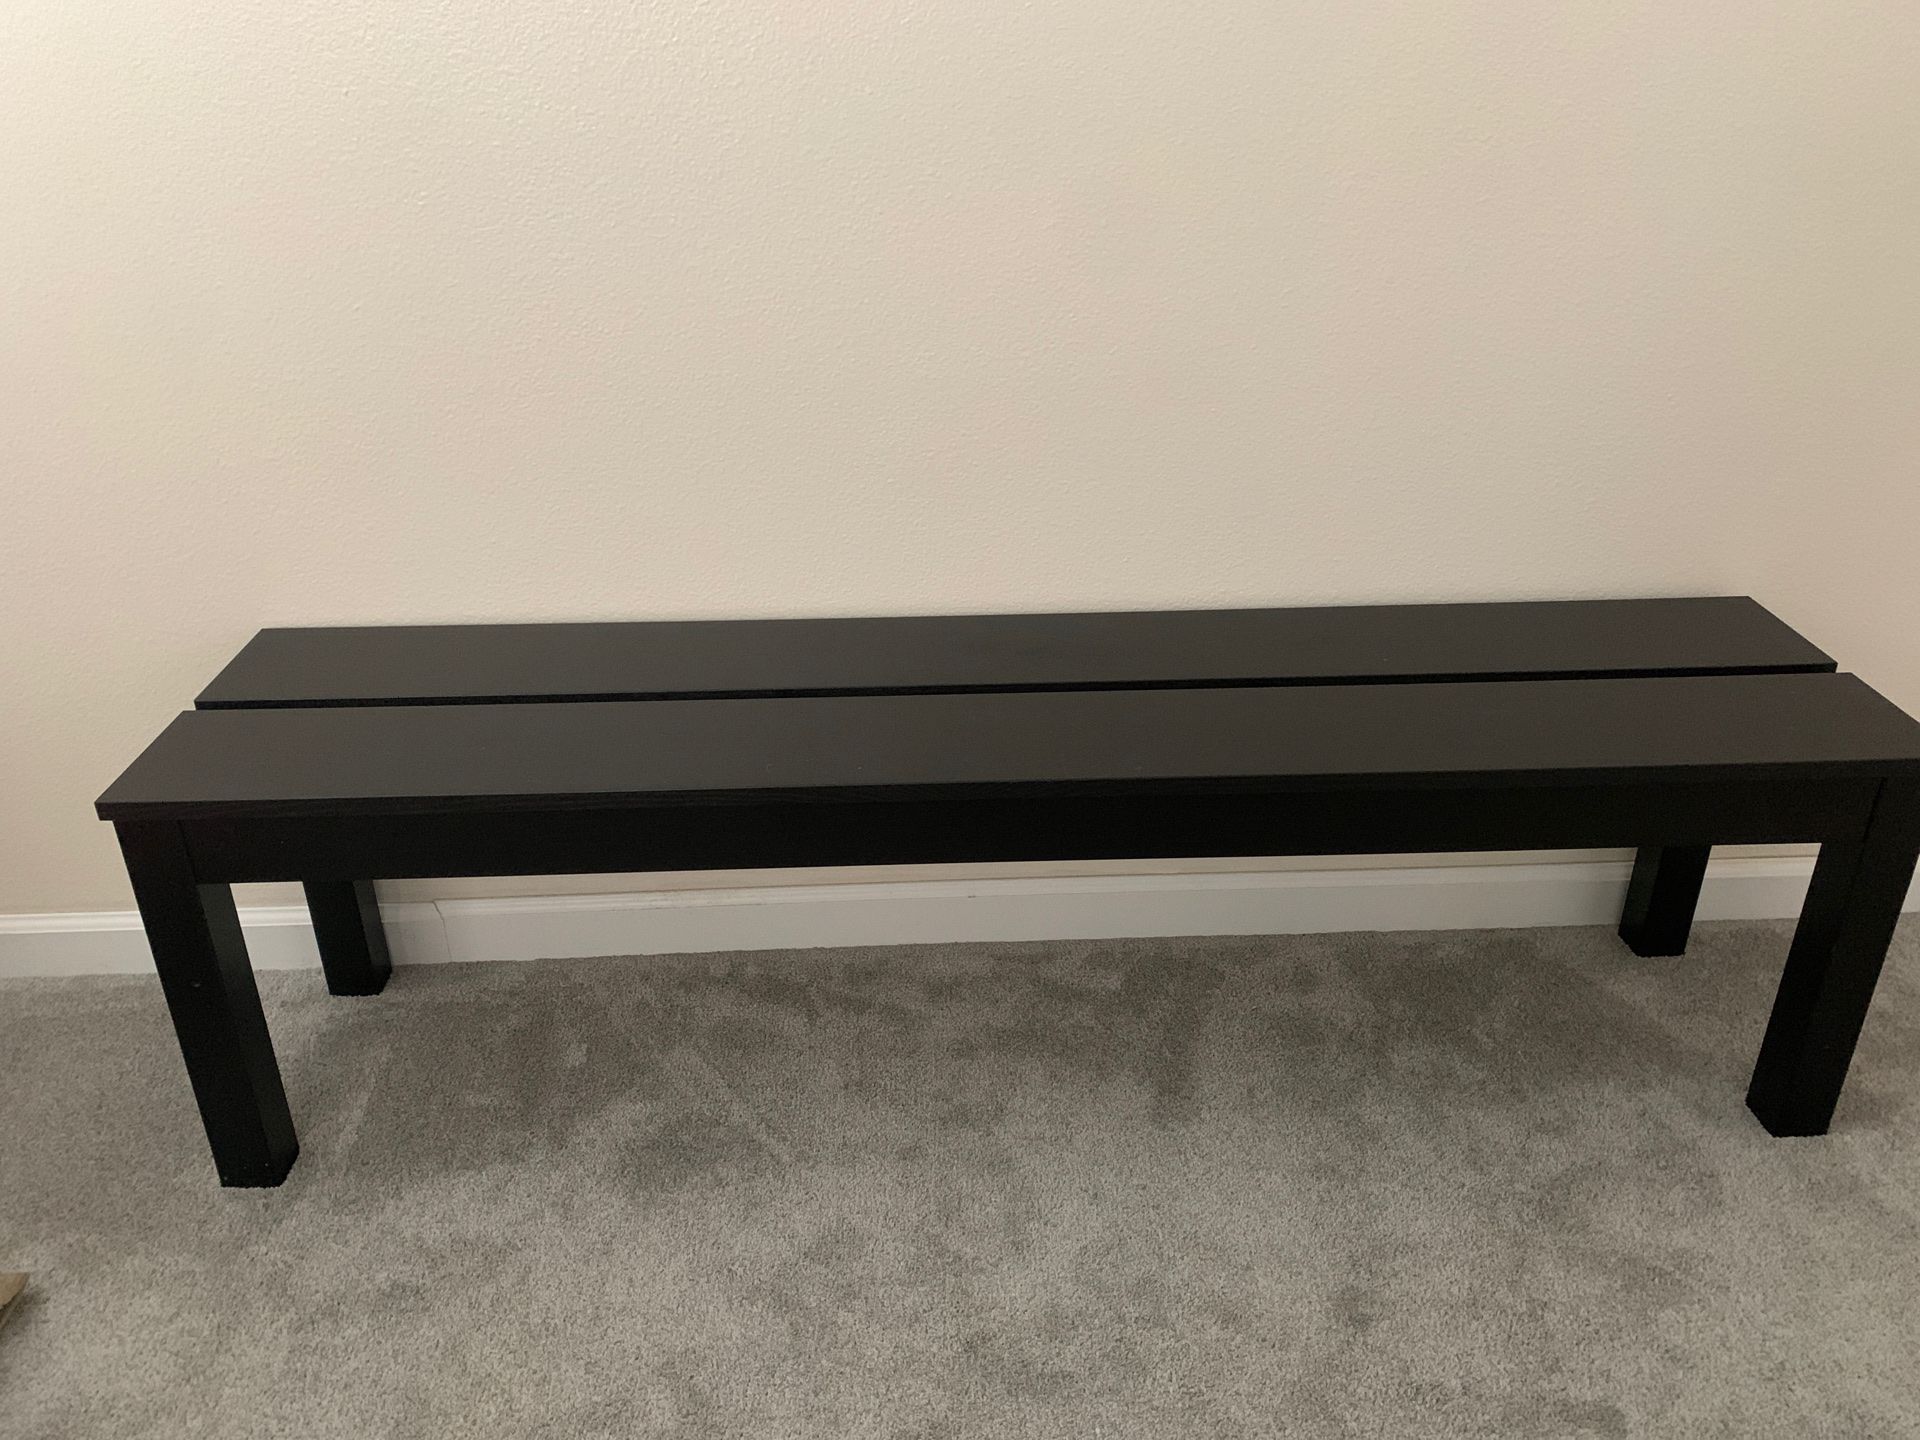 Ikea bench 6ft long set of 2